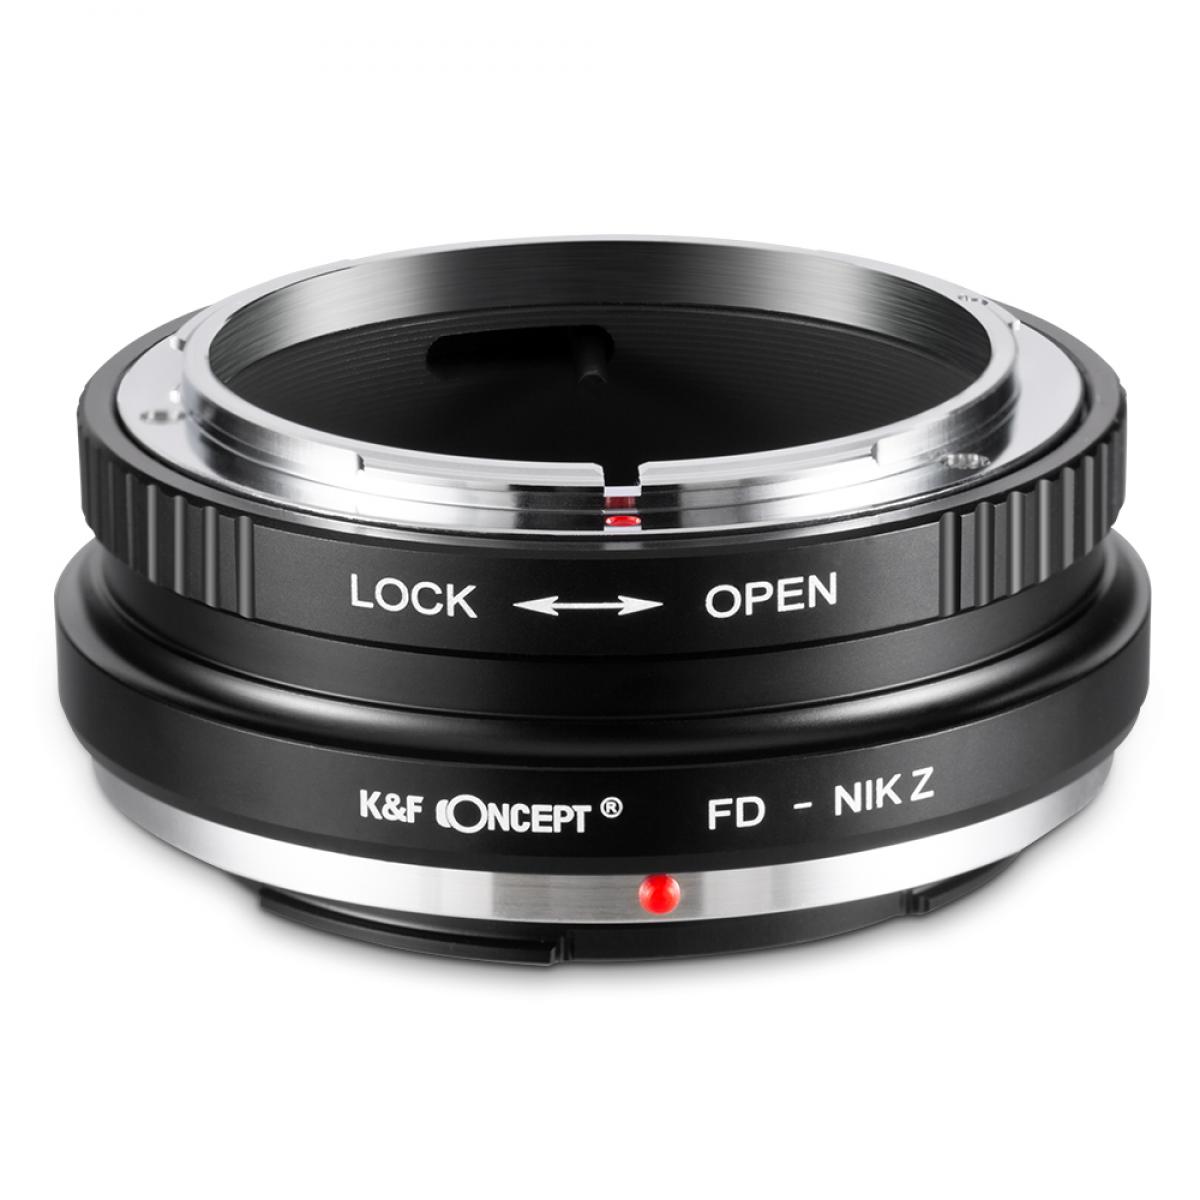 Lens Adapters Canon Fd Lenses To Nikon Z Camera Mount Adapter Kandf Concept